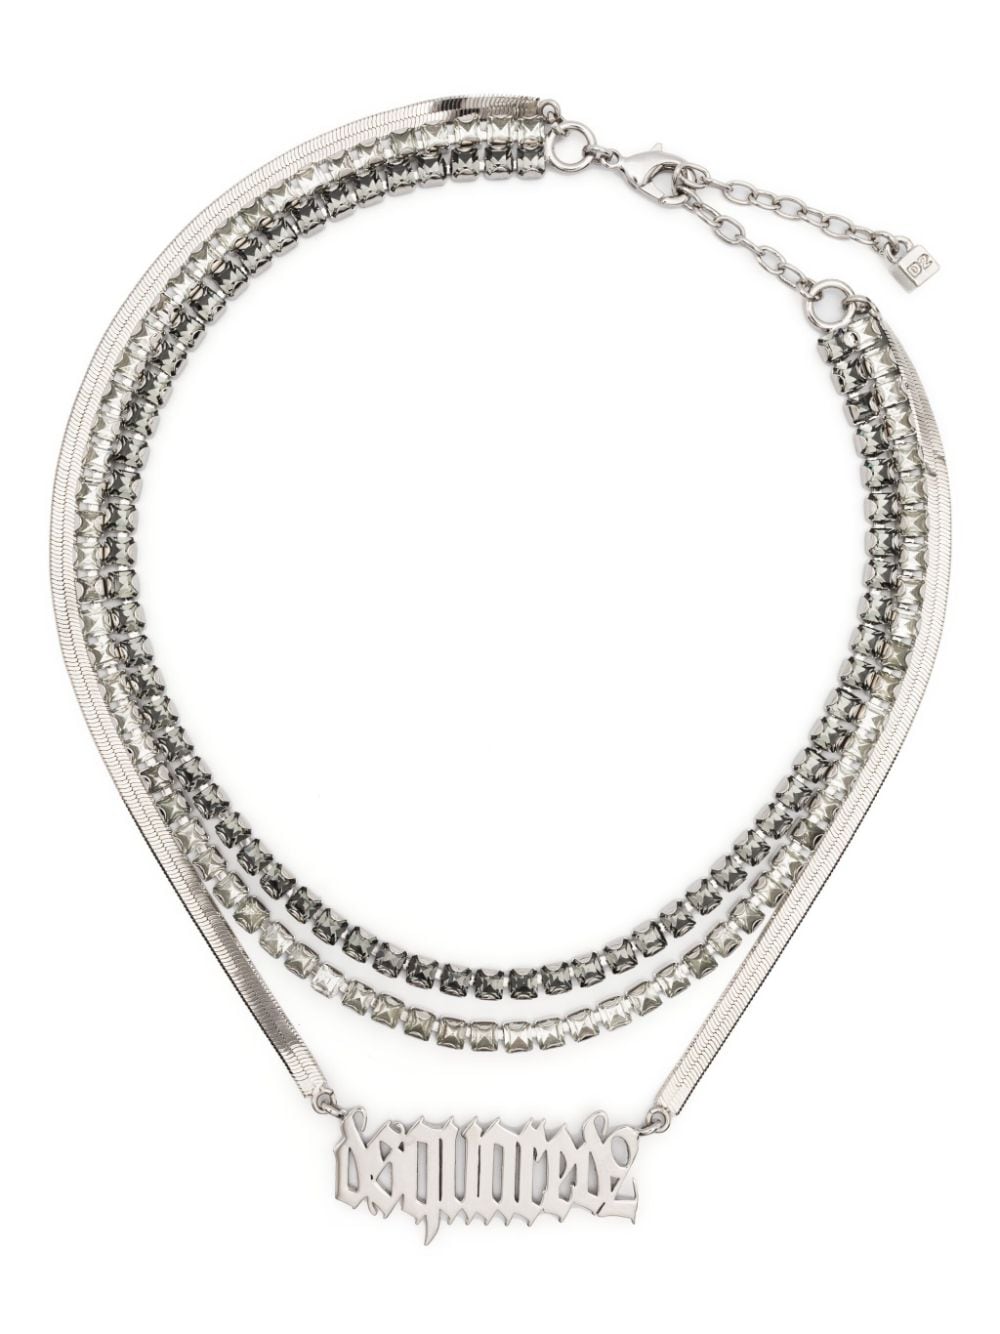 Gothic multi-chain necklace